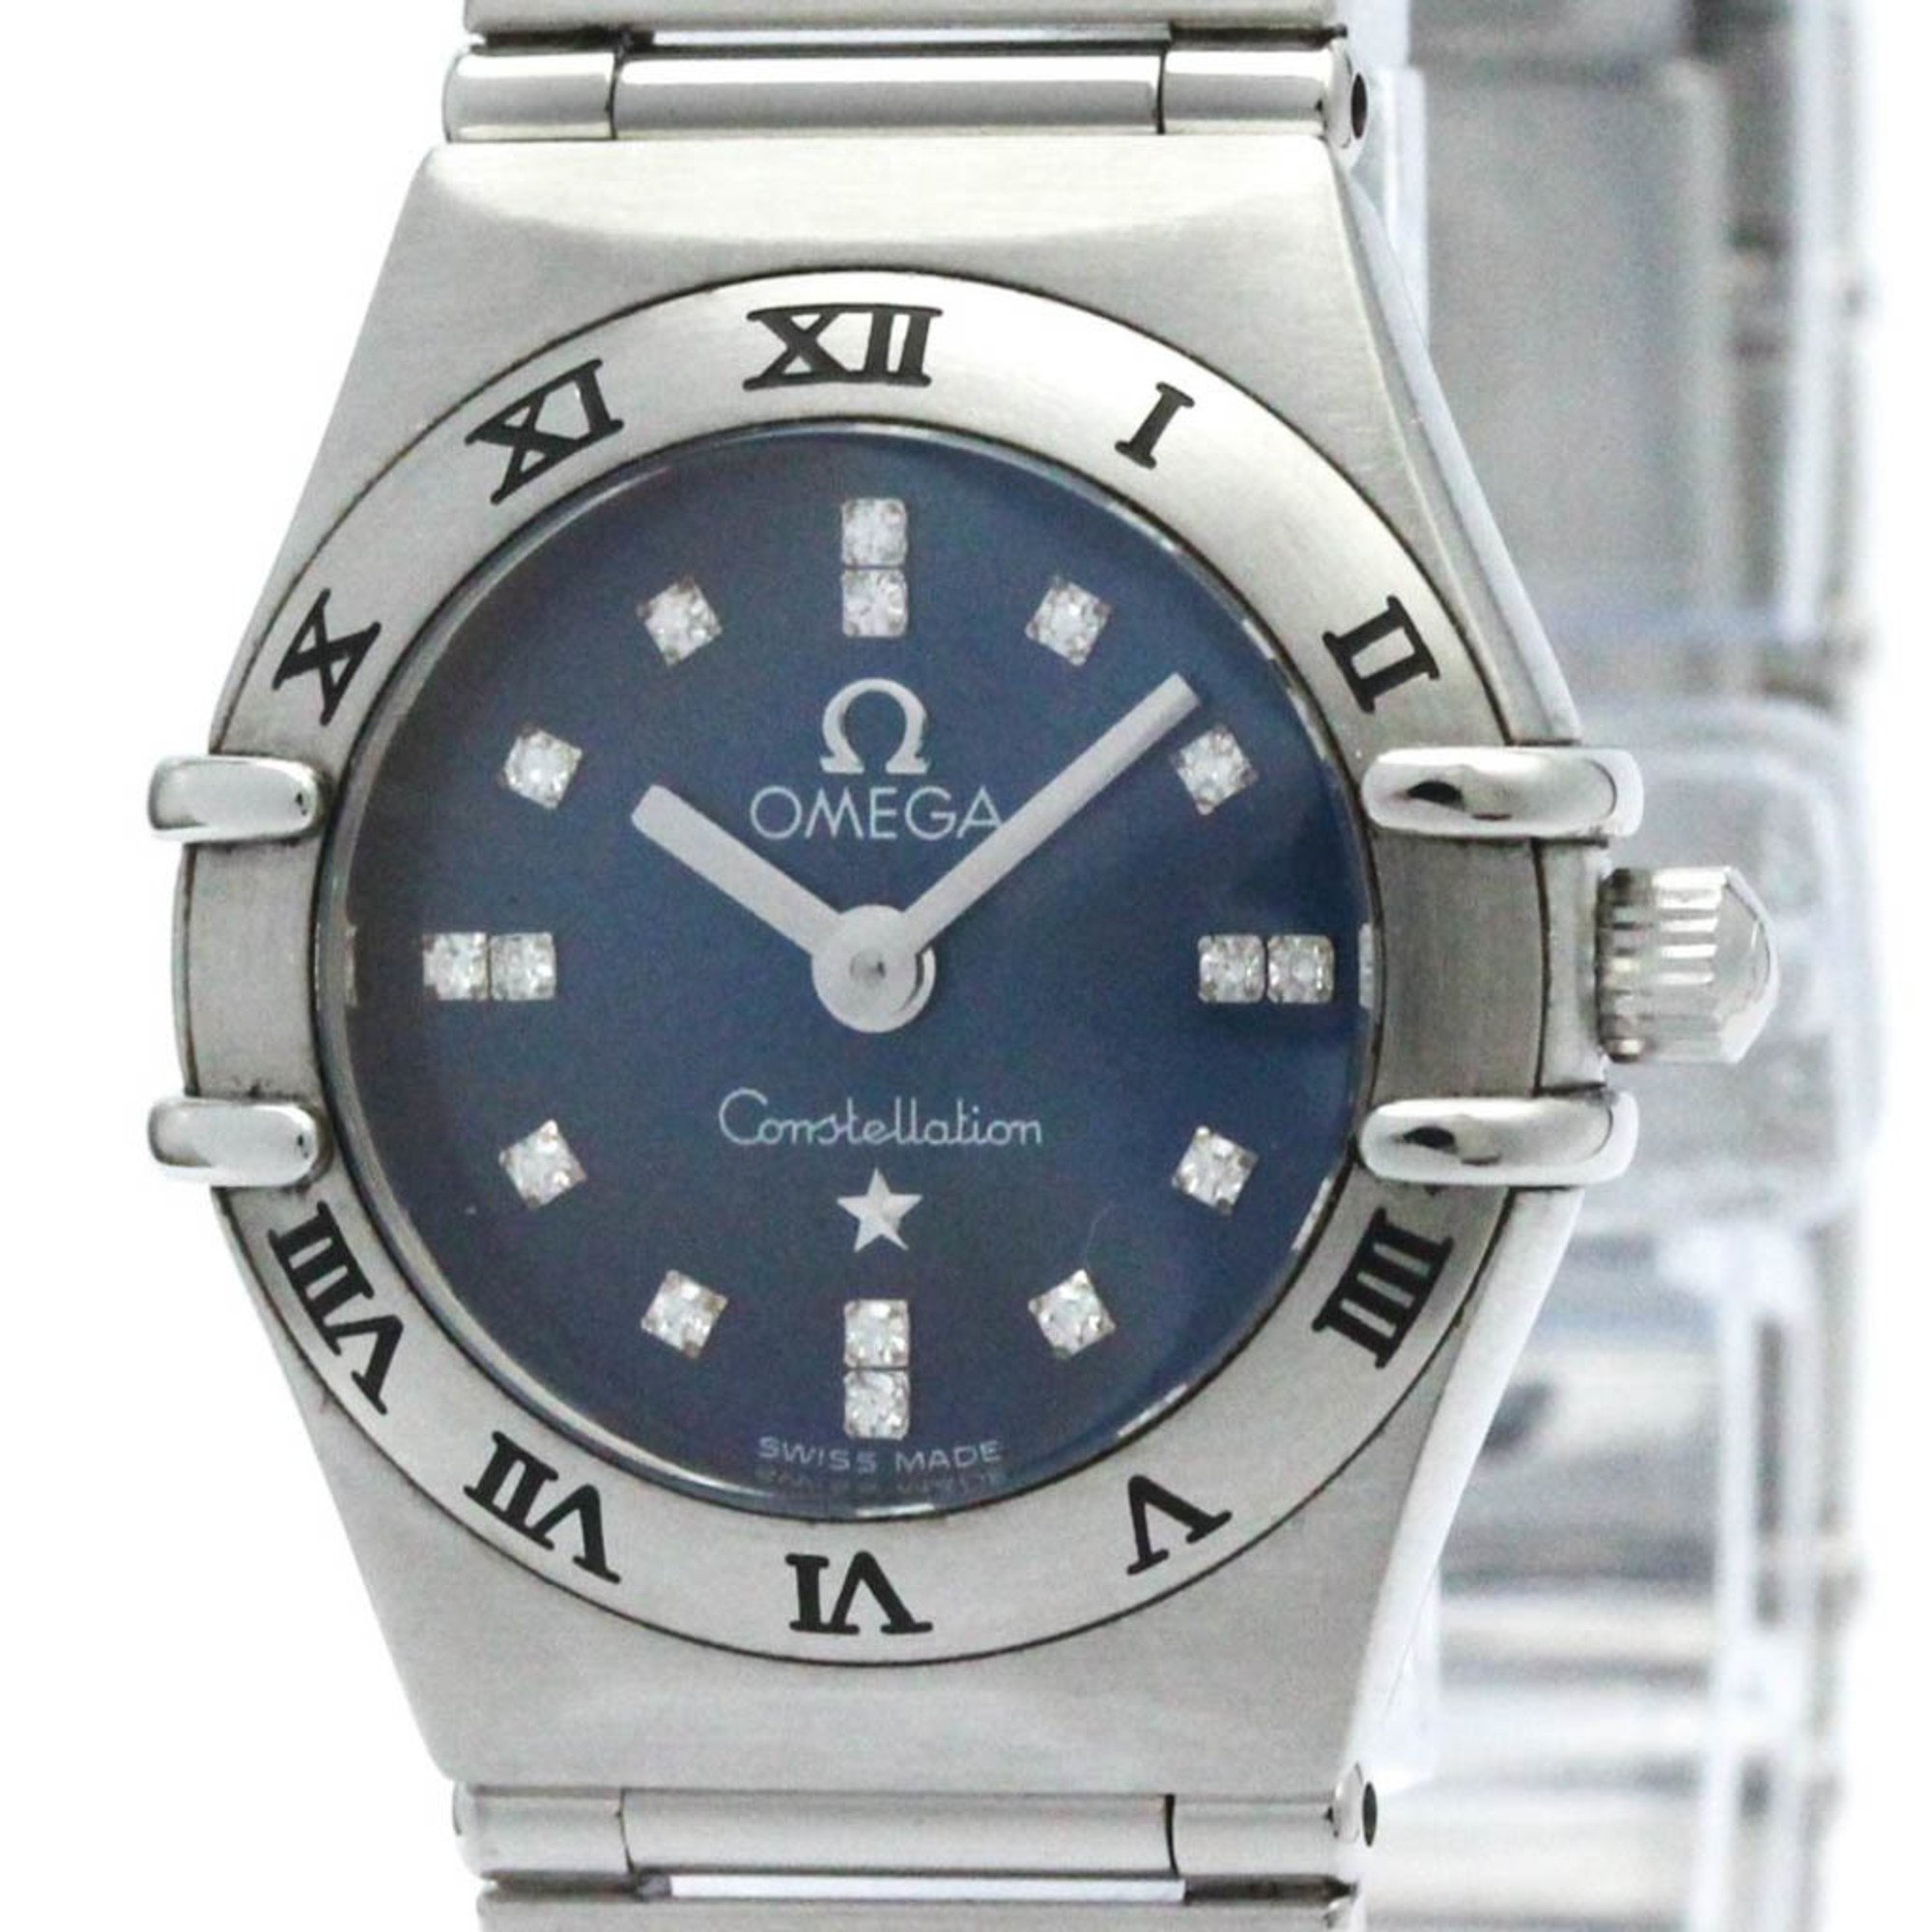 OMEGA Constellation Cindy Crawford LTD Edition Diamond Watch 1563.86 BF571656